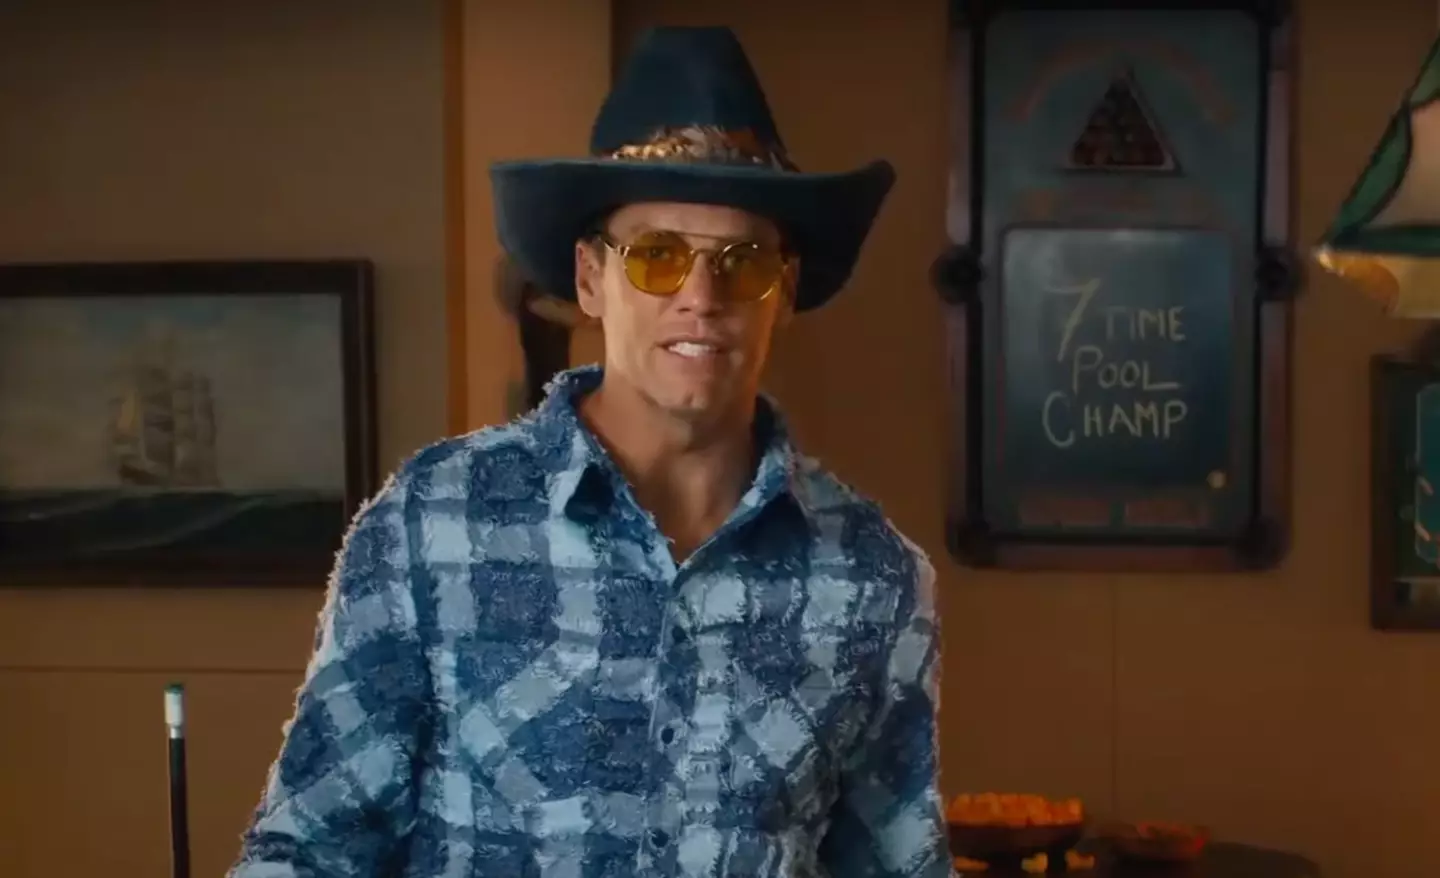 Brady during the BetMGM ad.